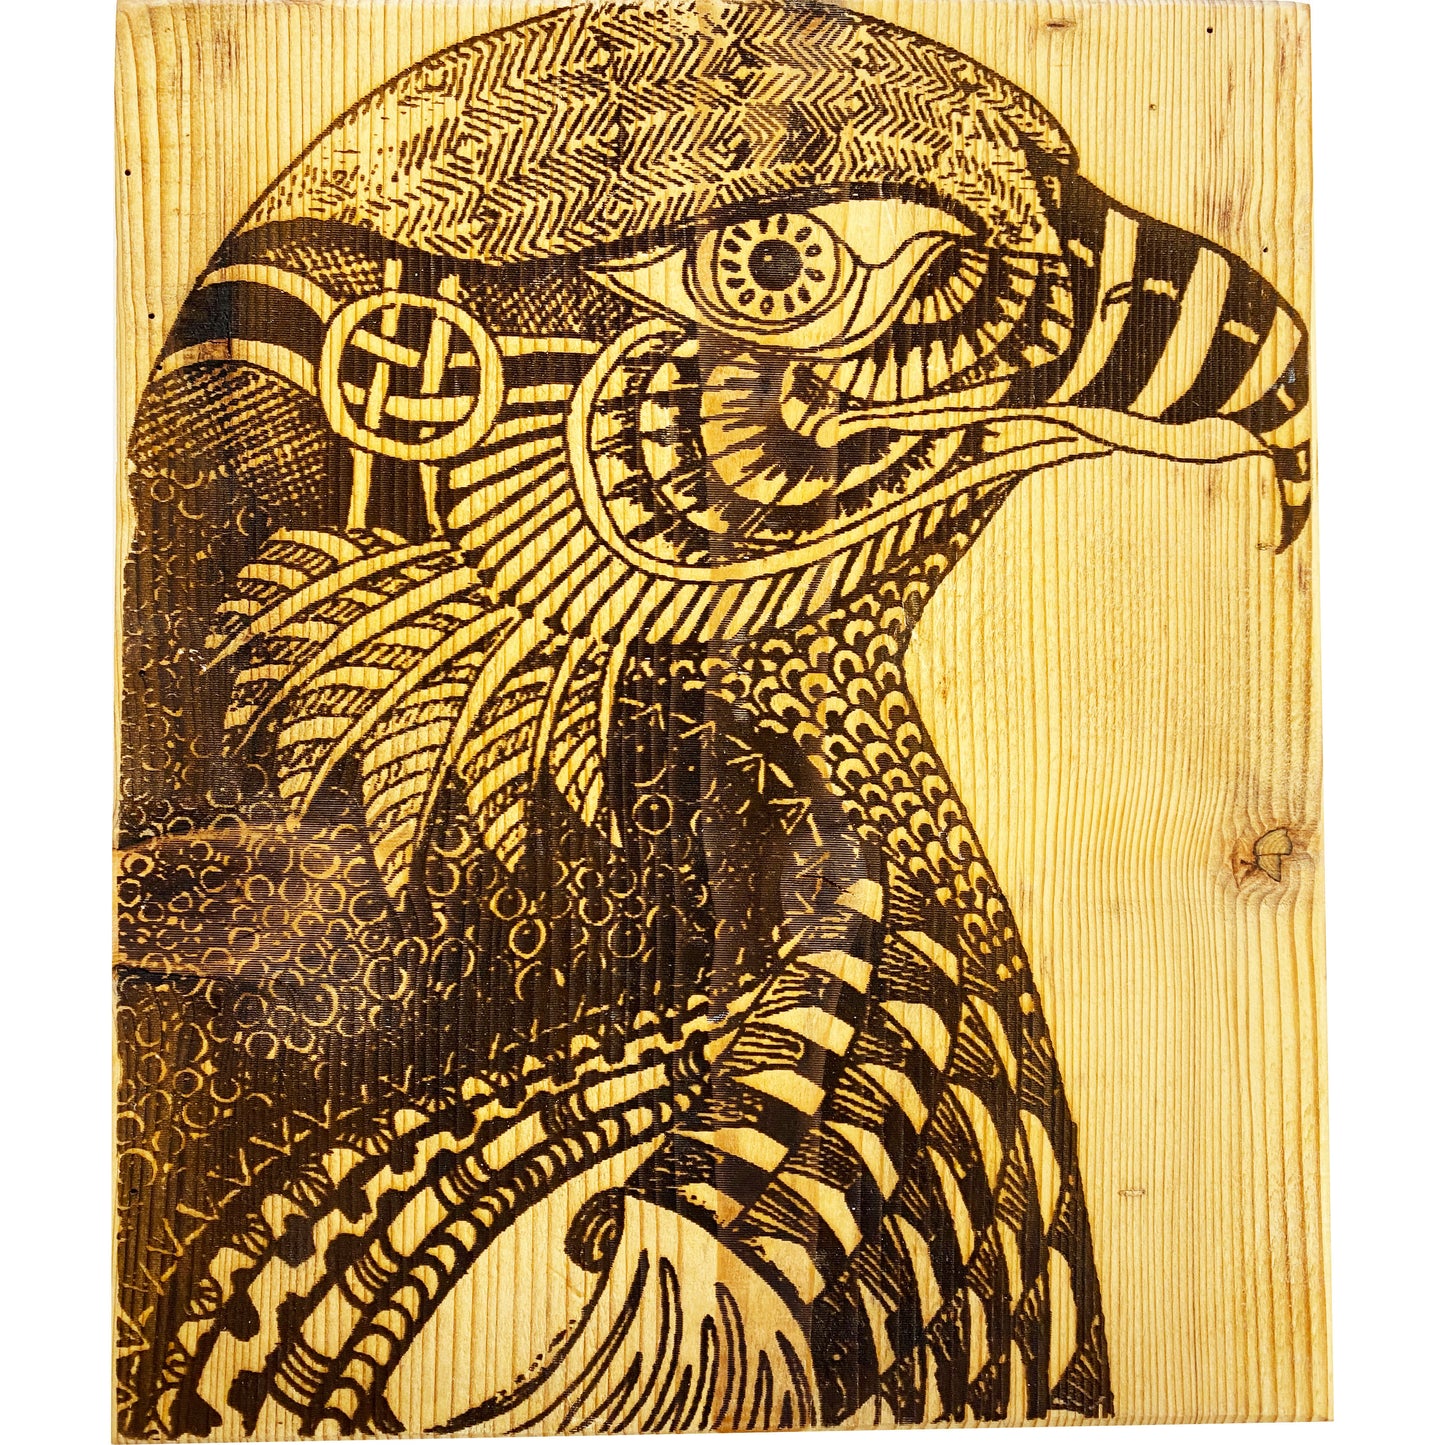 Etched Wood Burning, Original Fine Art, Eagle, 12 x 10.5" made by Lukas Miller